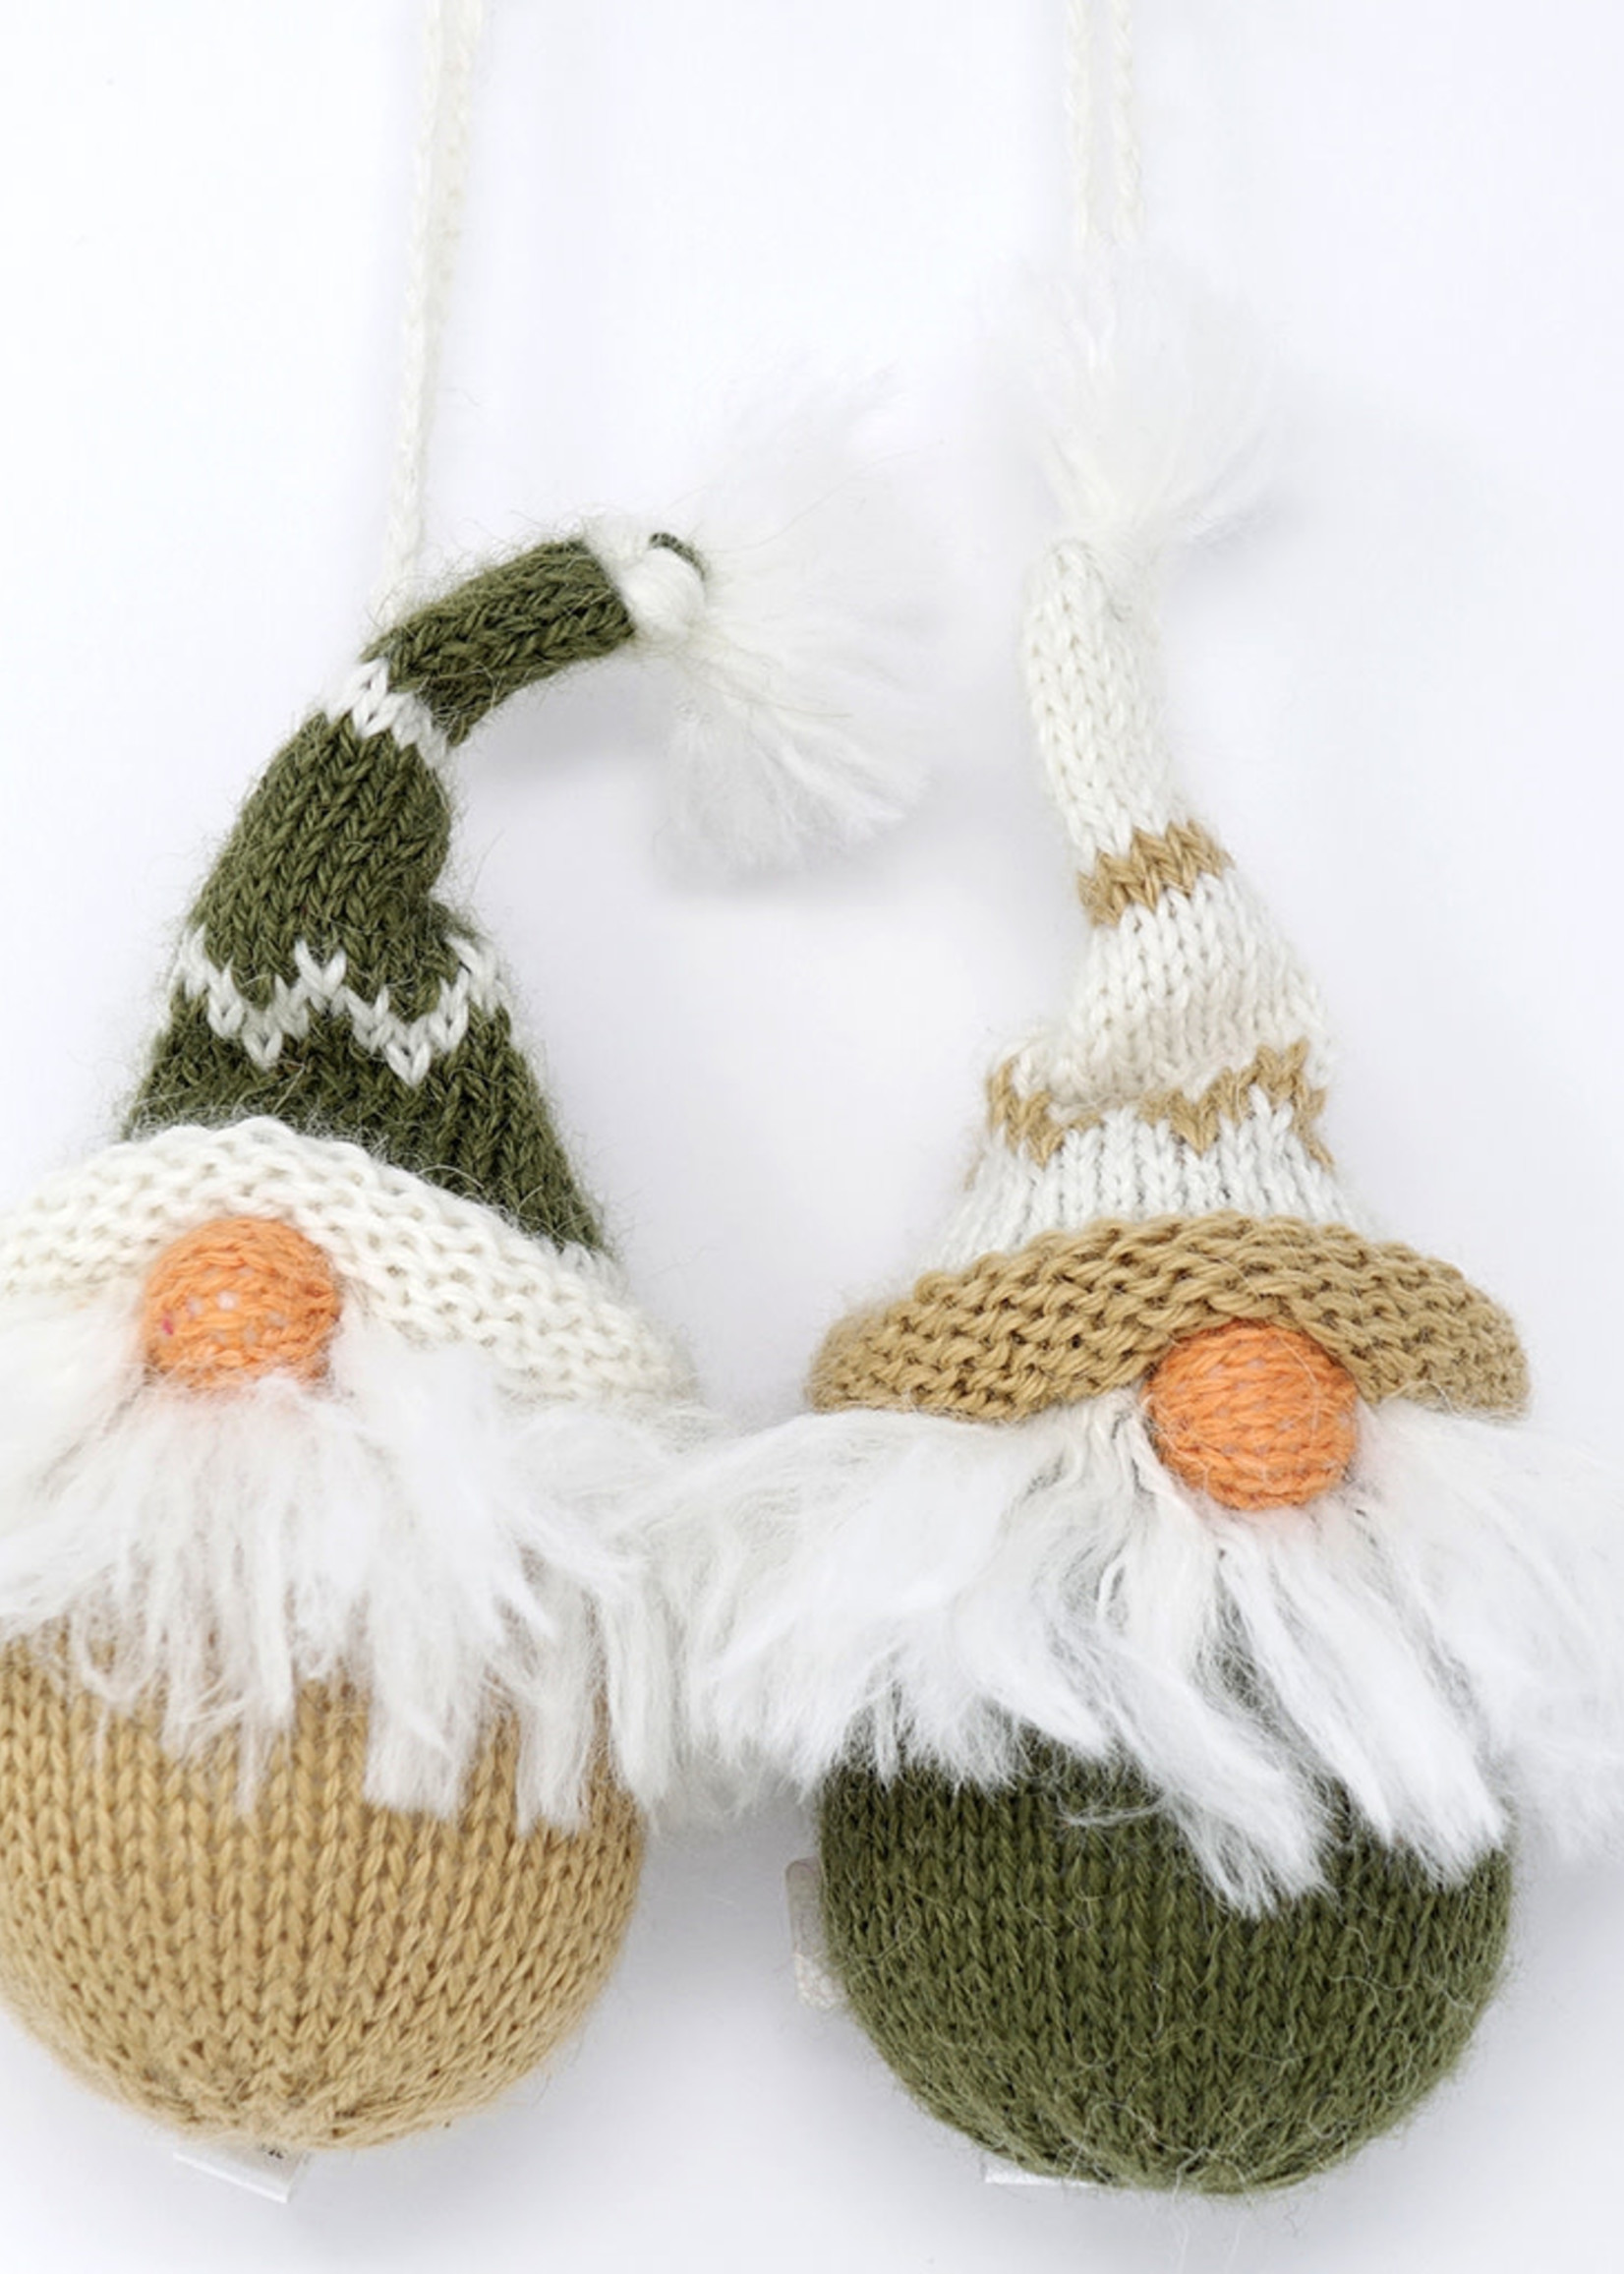 Crochet Tree Ornaments